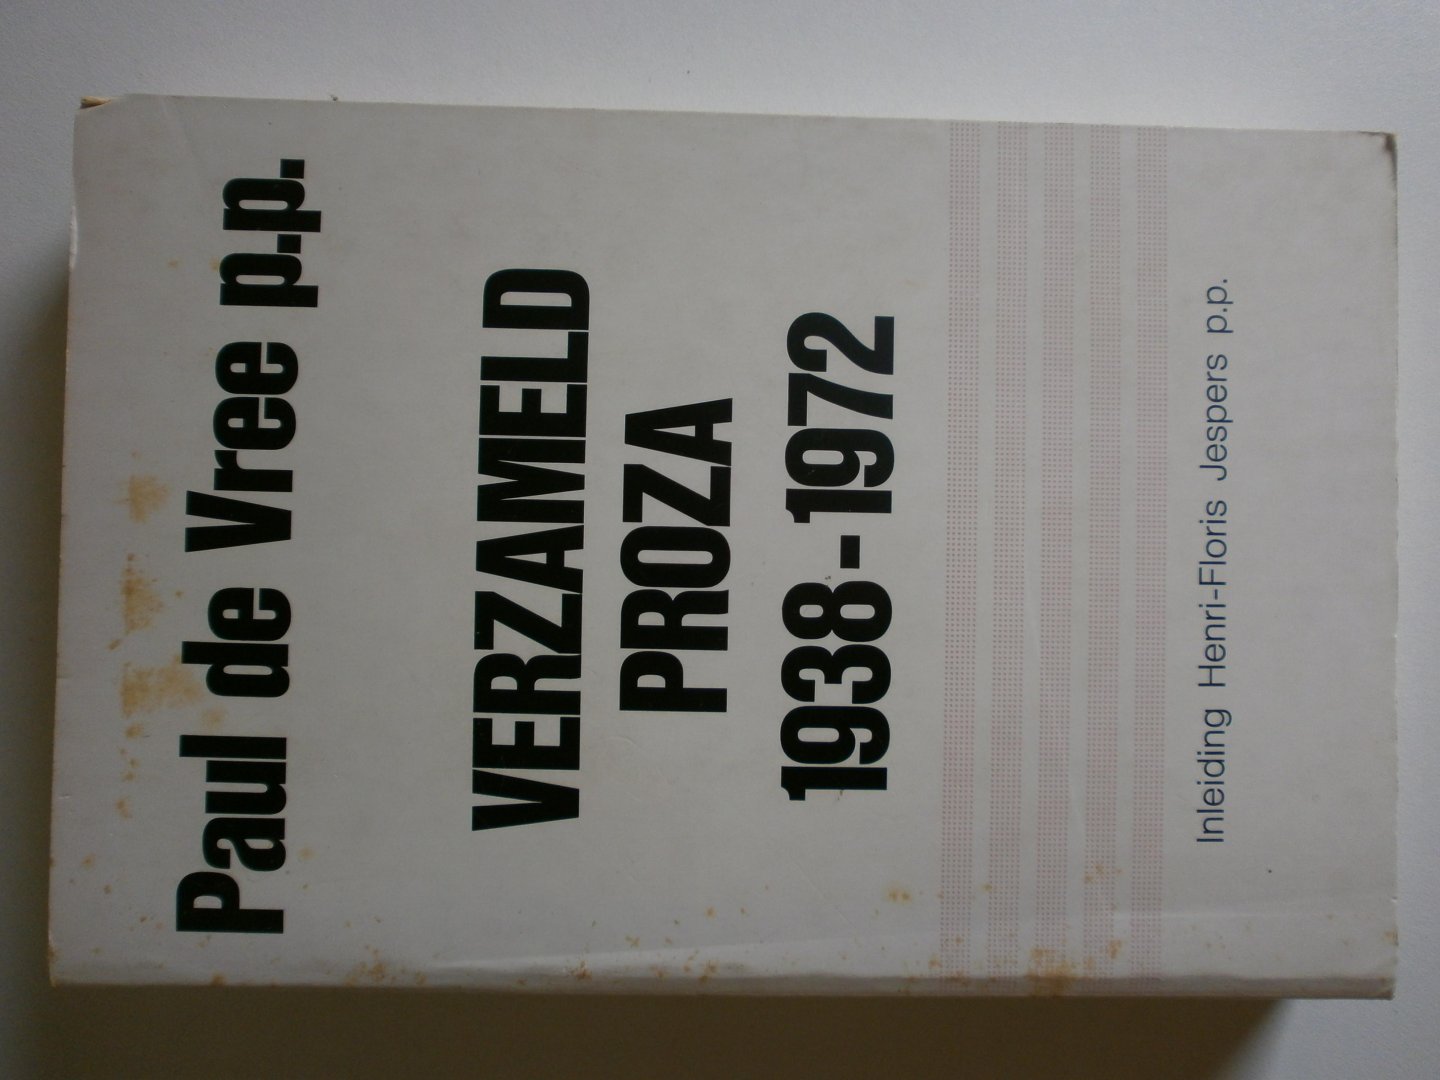 Vree p.p., Paul de - Verzameld proza 1938-1972